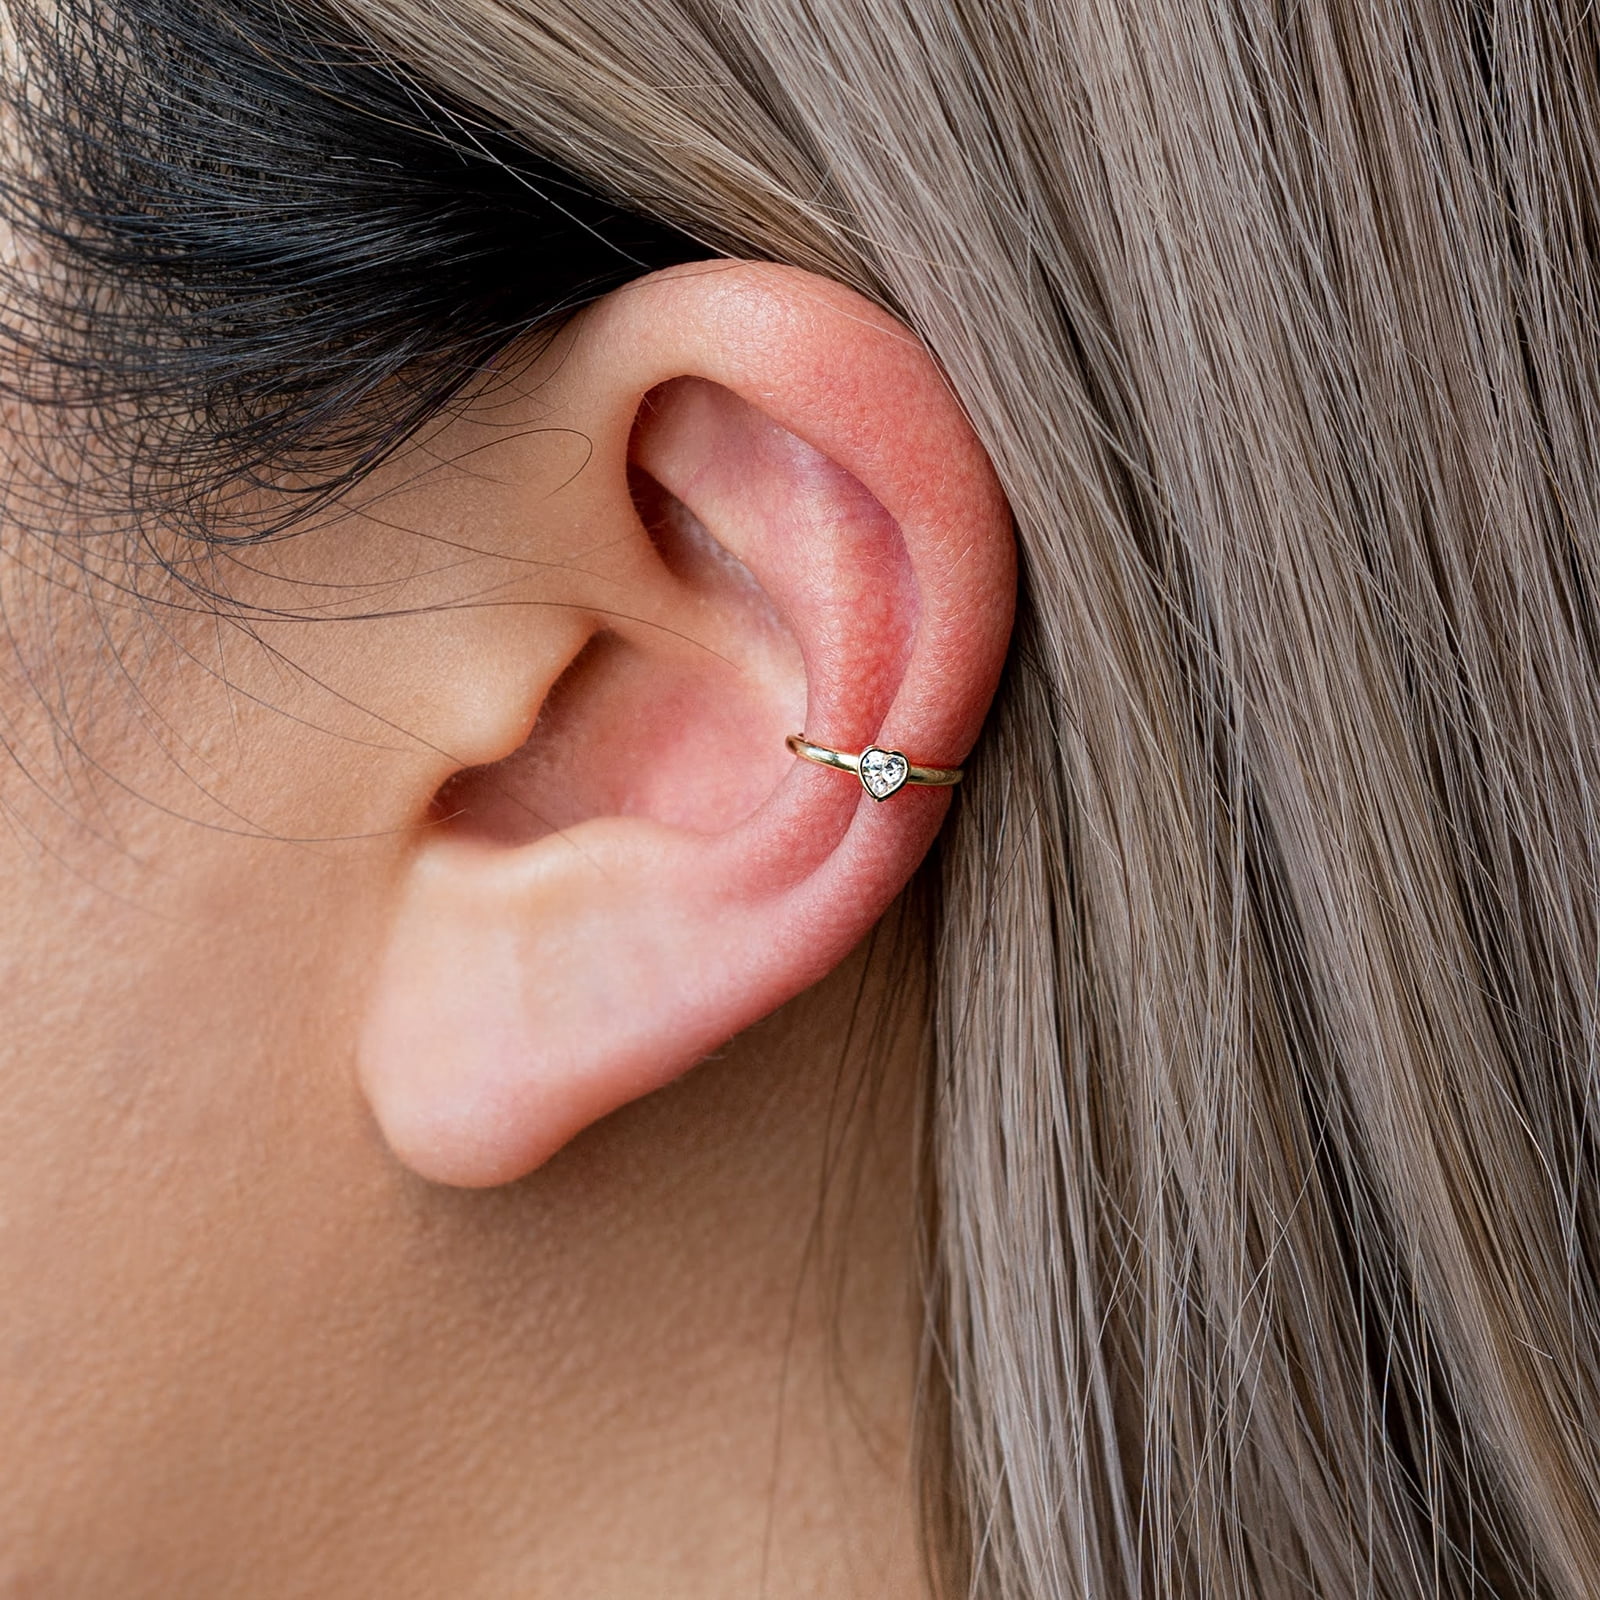 Graduated Line CZ Minimalist Tragus Ear Piercing Stud Real 14k Solid Gold 